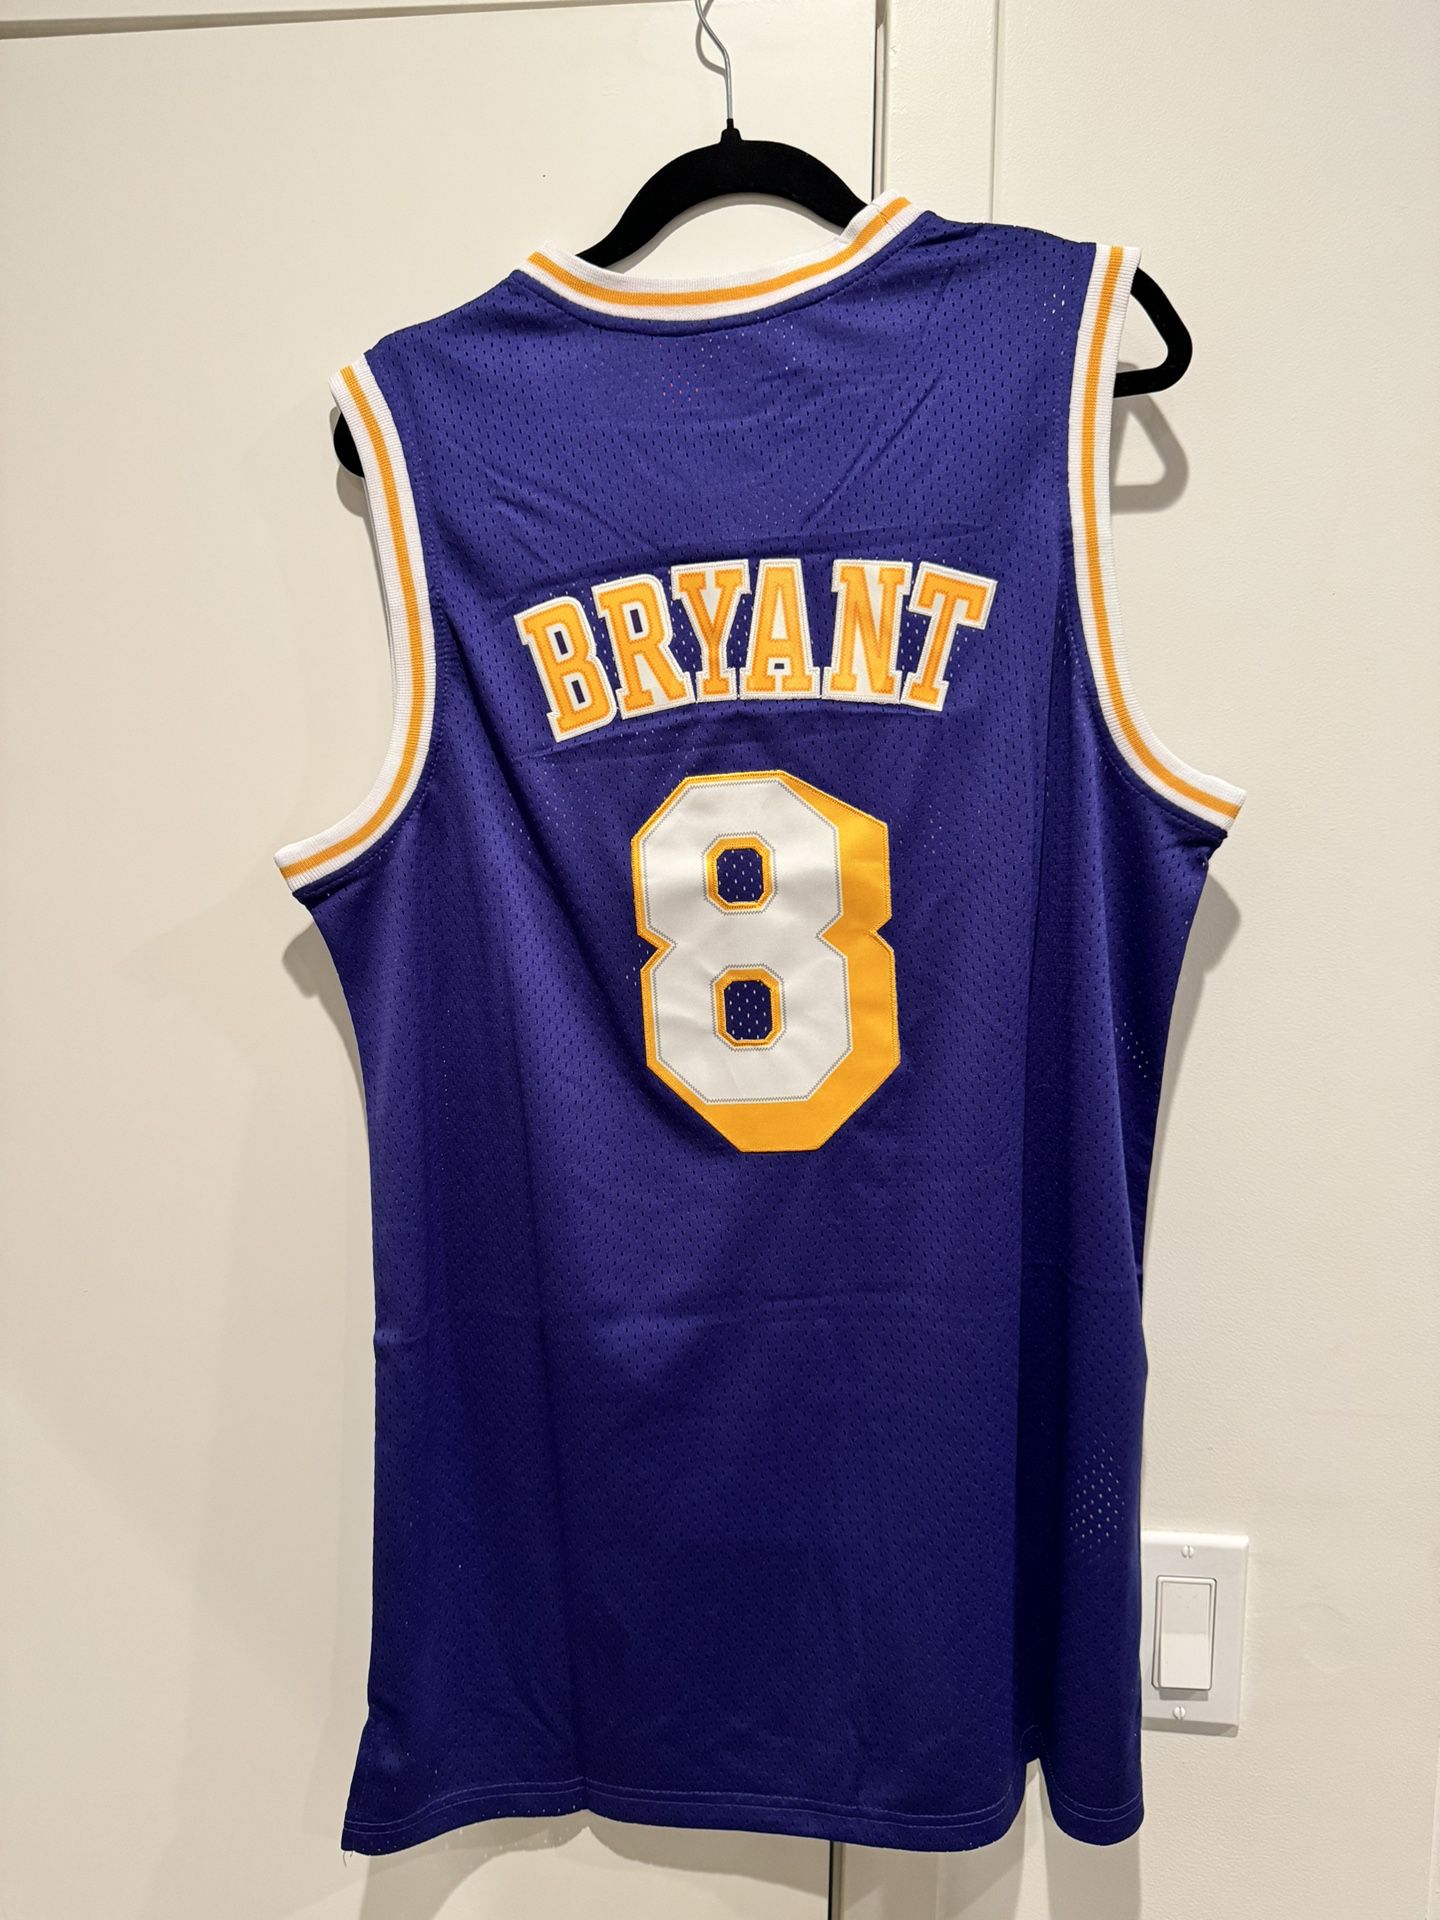 Lakers - Kobe Bryant 8 Jersey - XL